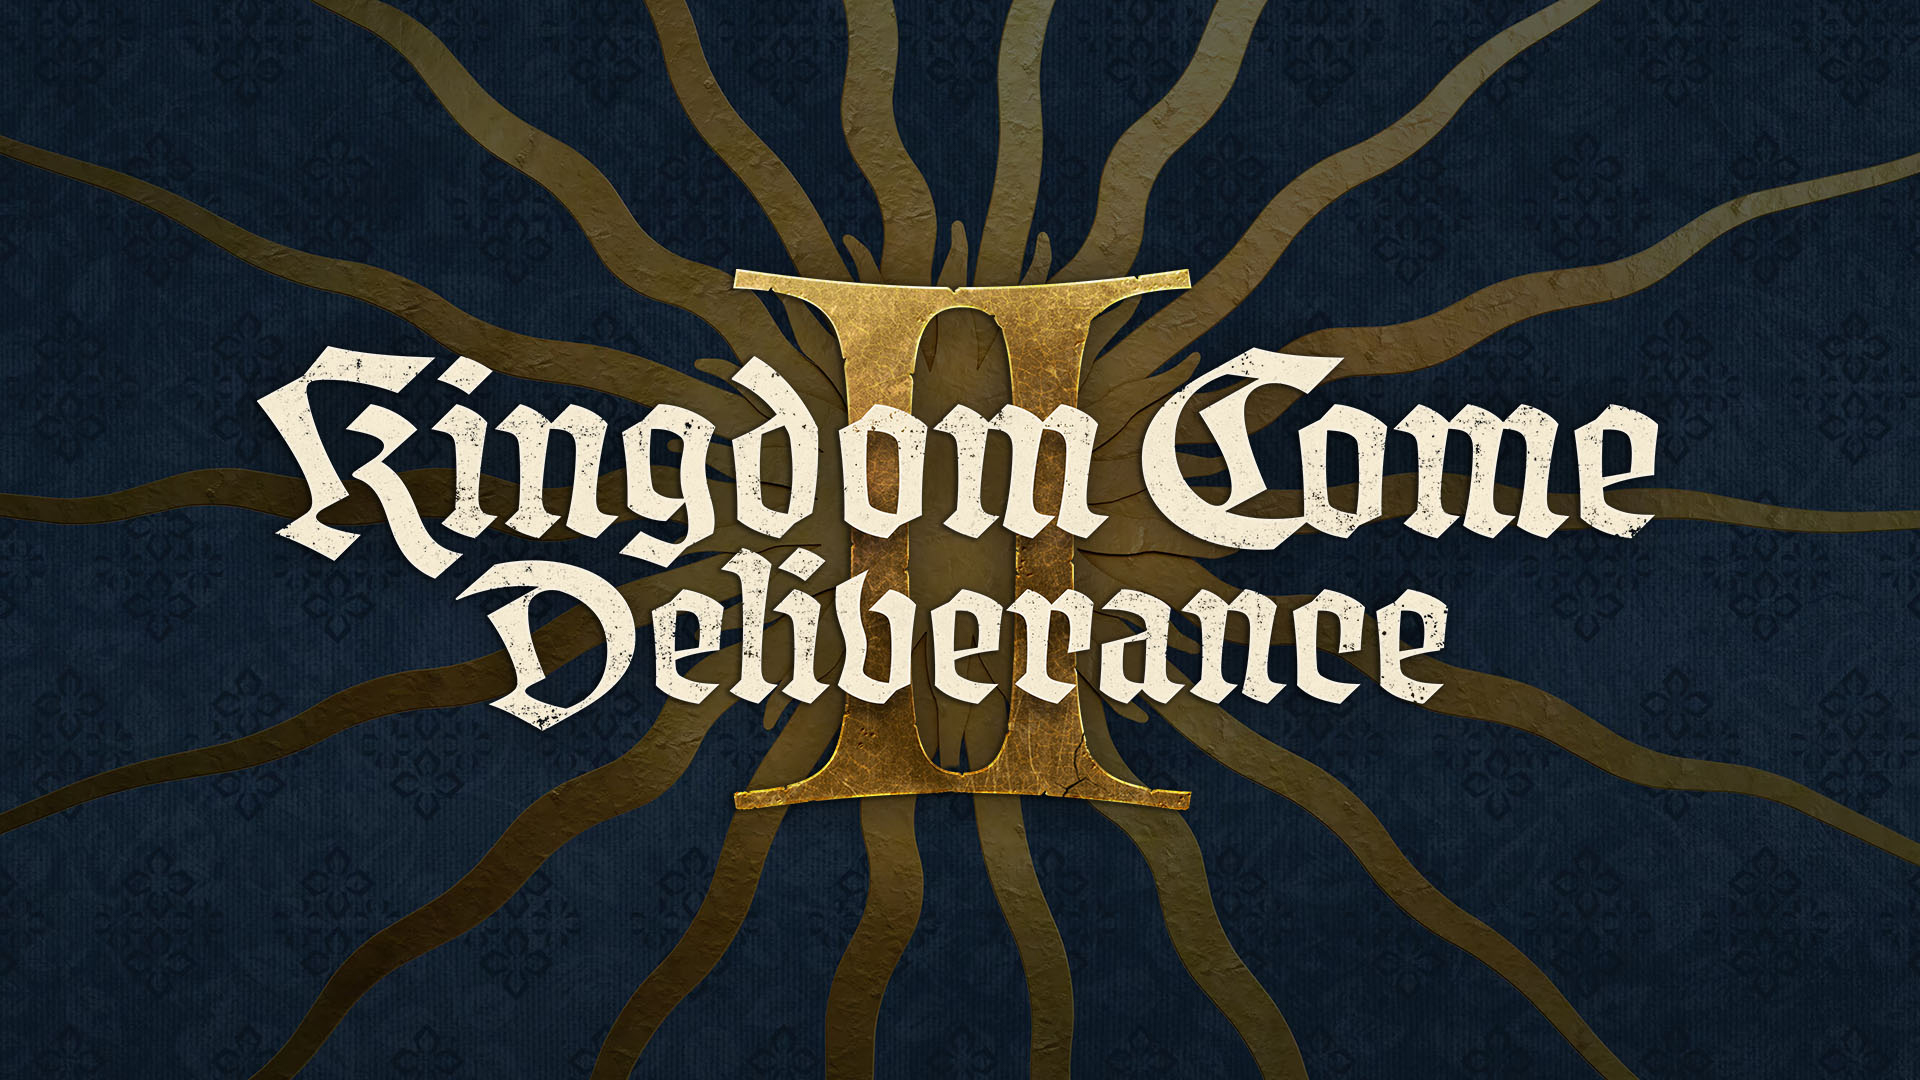 Kingdom Come: Deliverance II screenshot 67262